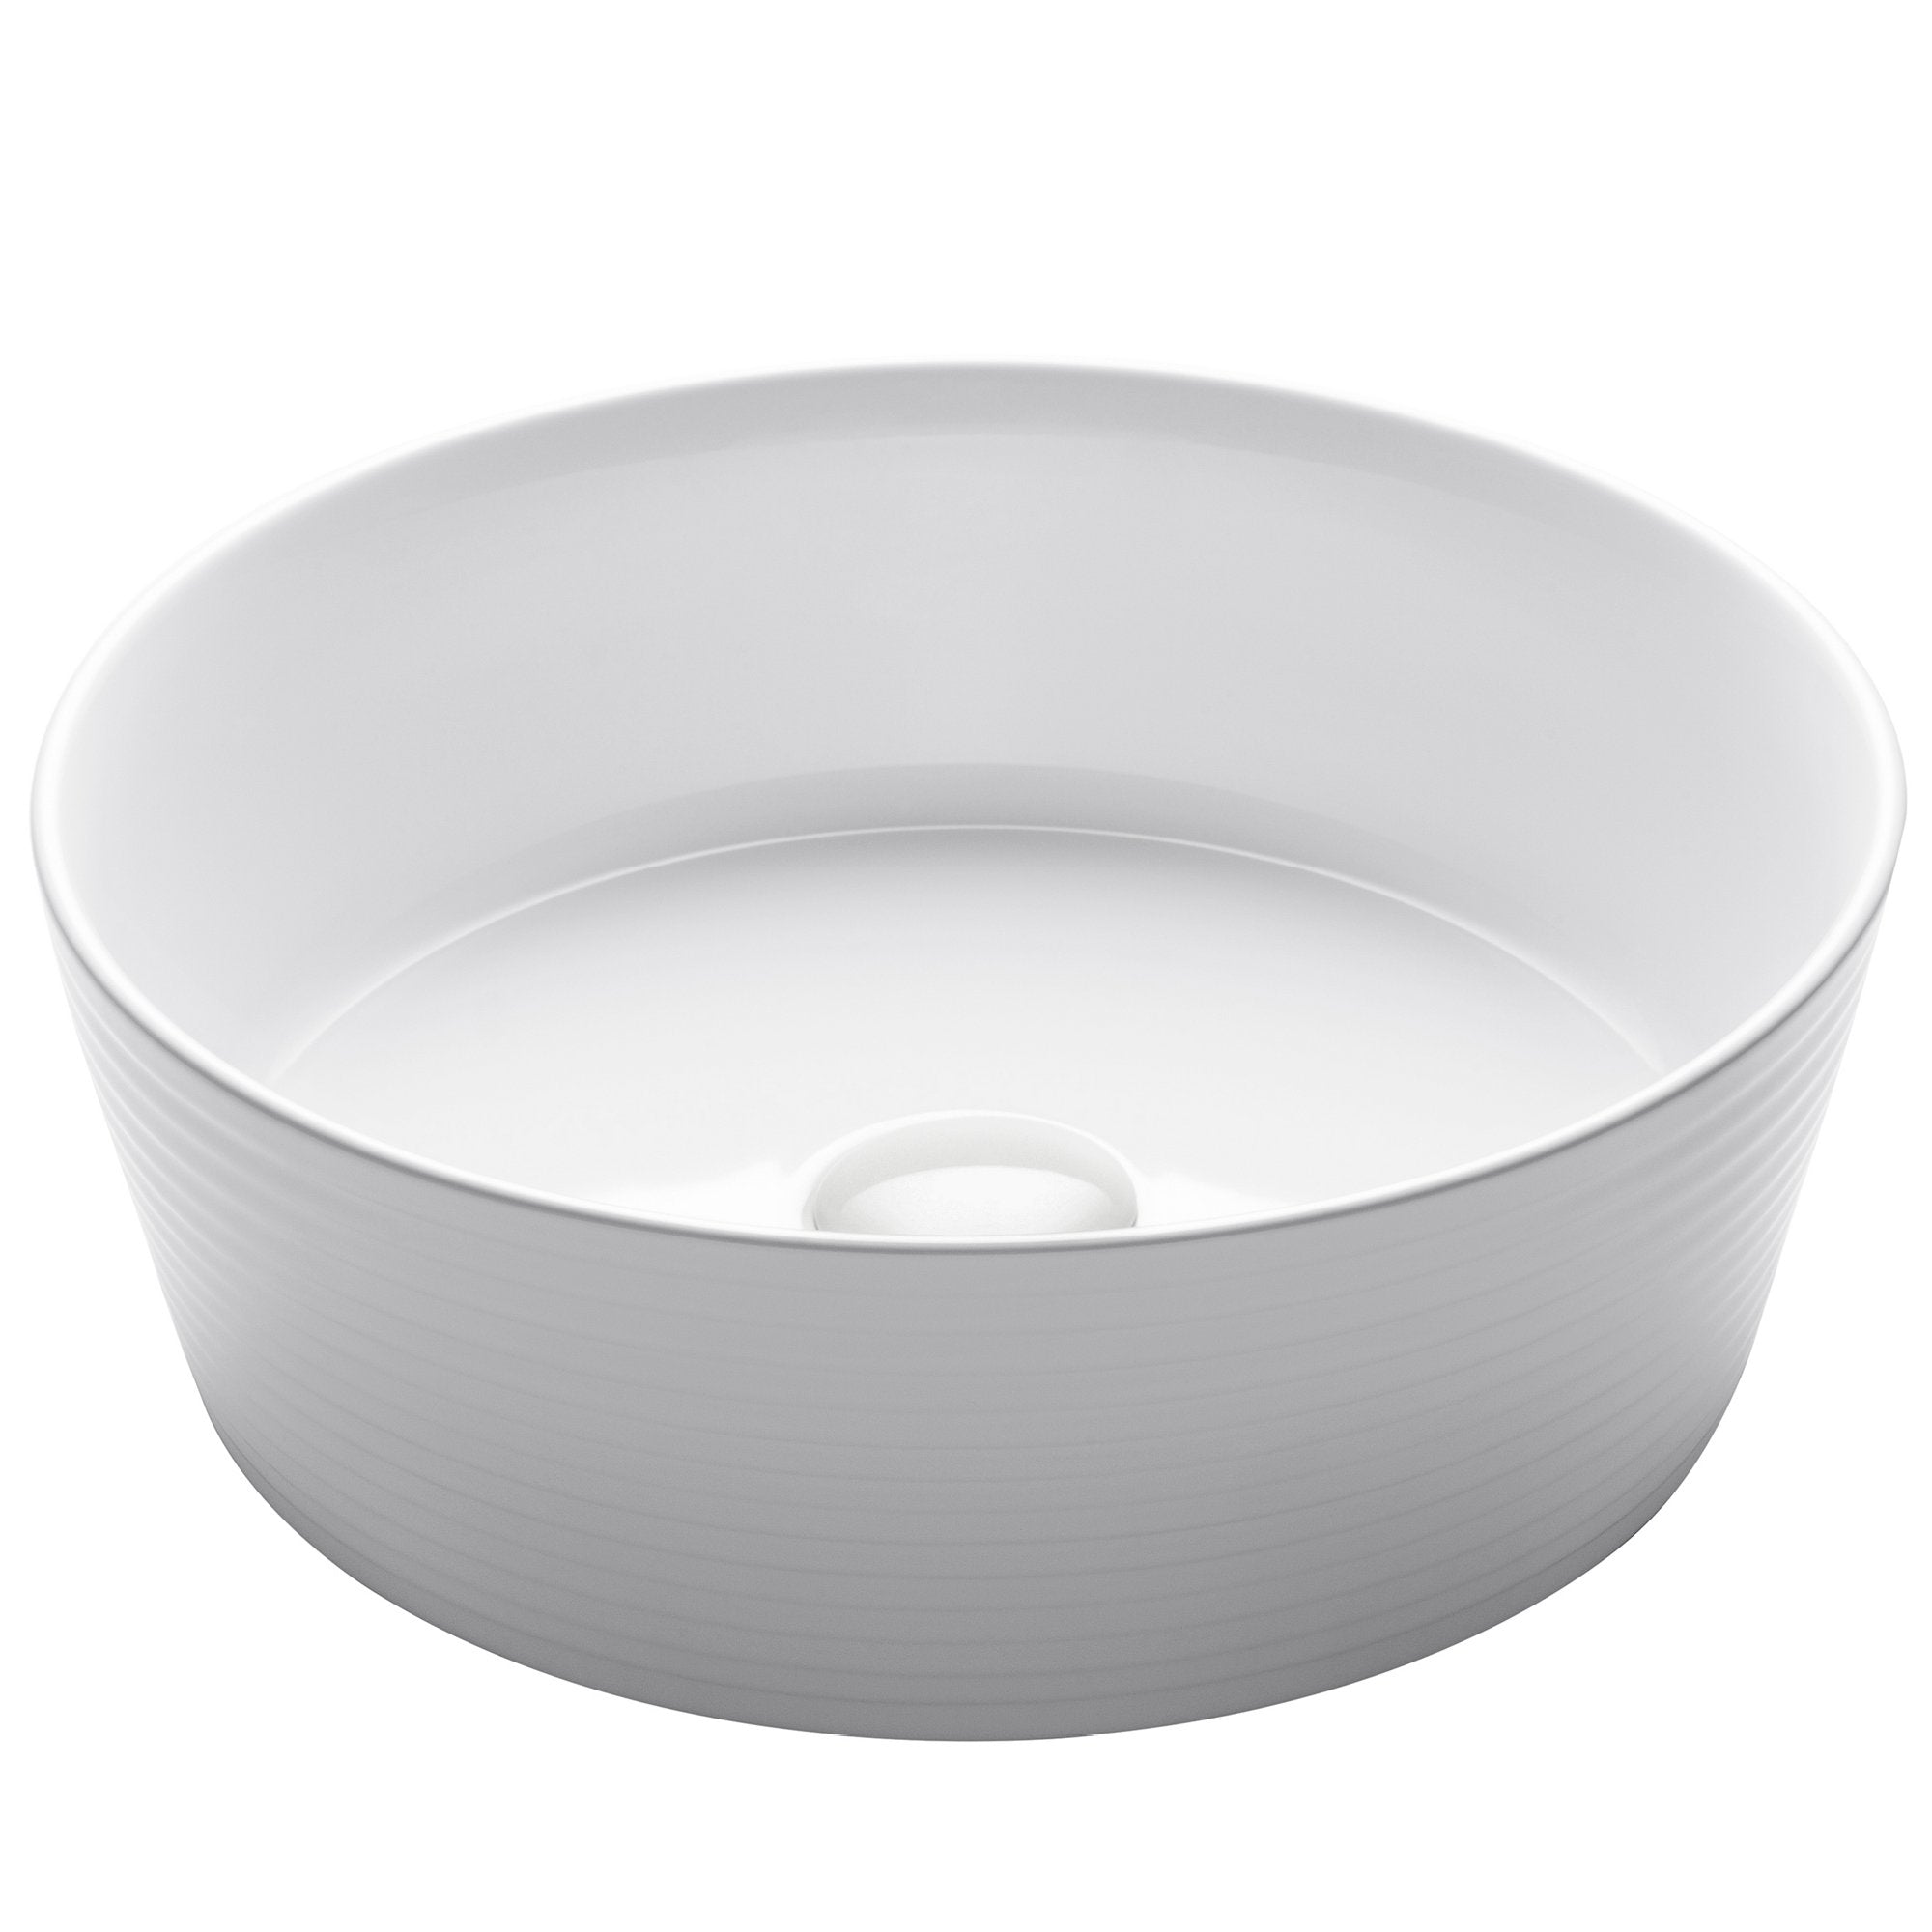 KRAUS Viva„¢ 15.75 Inch Round Porcelain Ceramic Vessel Bathroom Sink-Bathroom Sinks-KRAUS